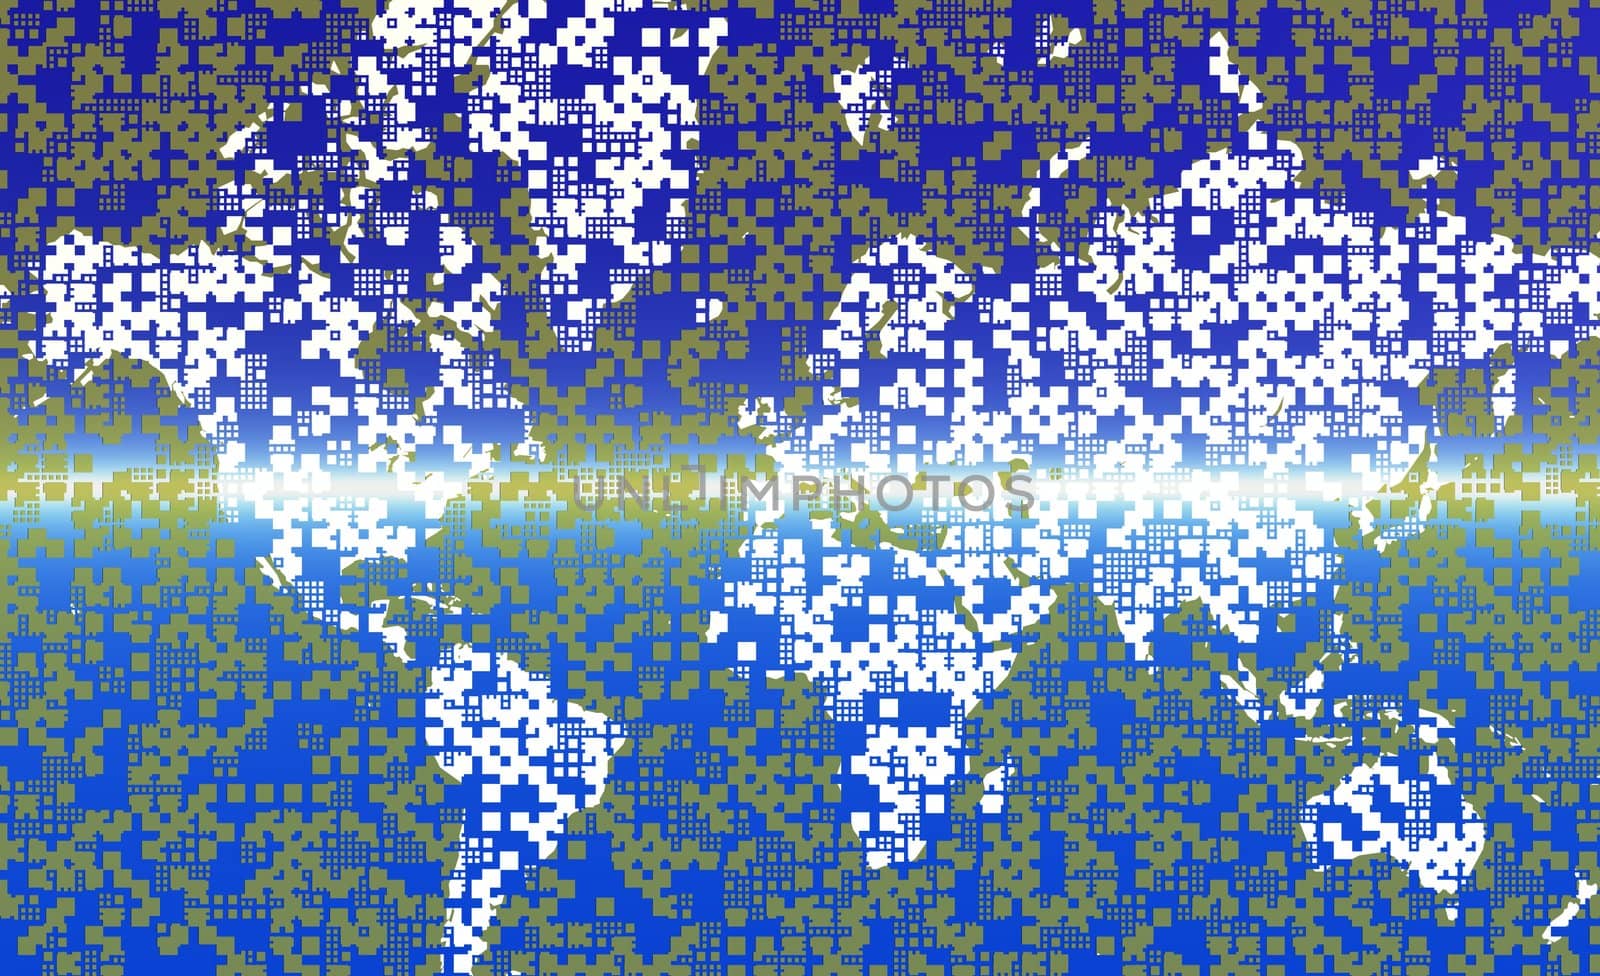 Abstract Block Map by jasony00